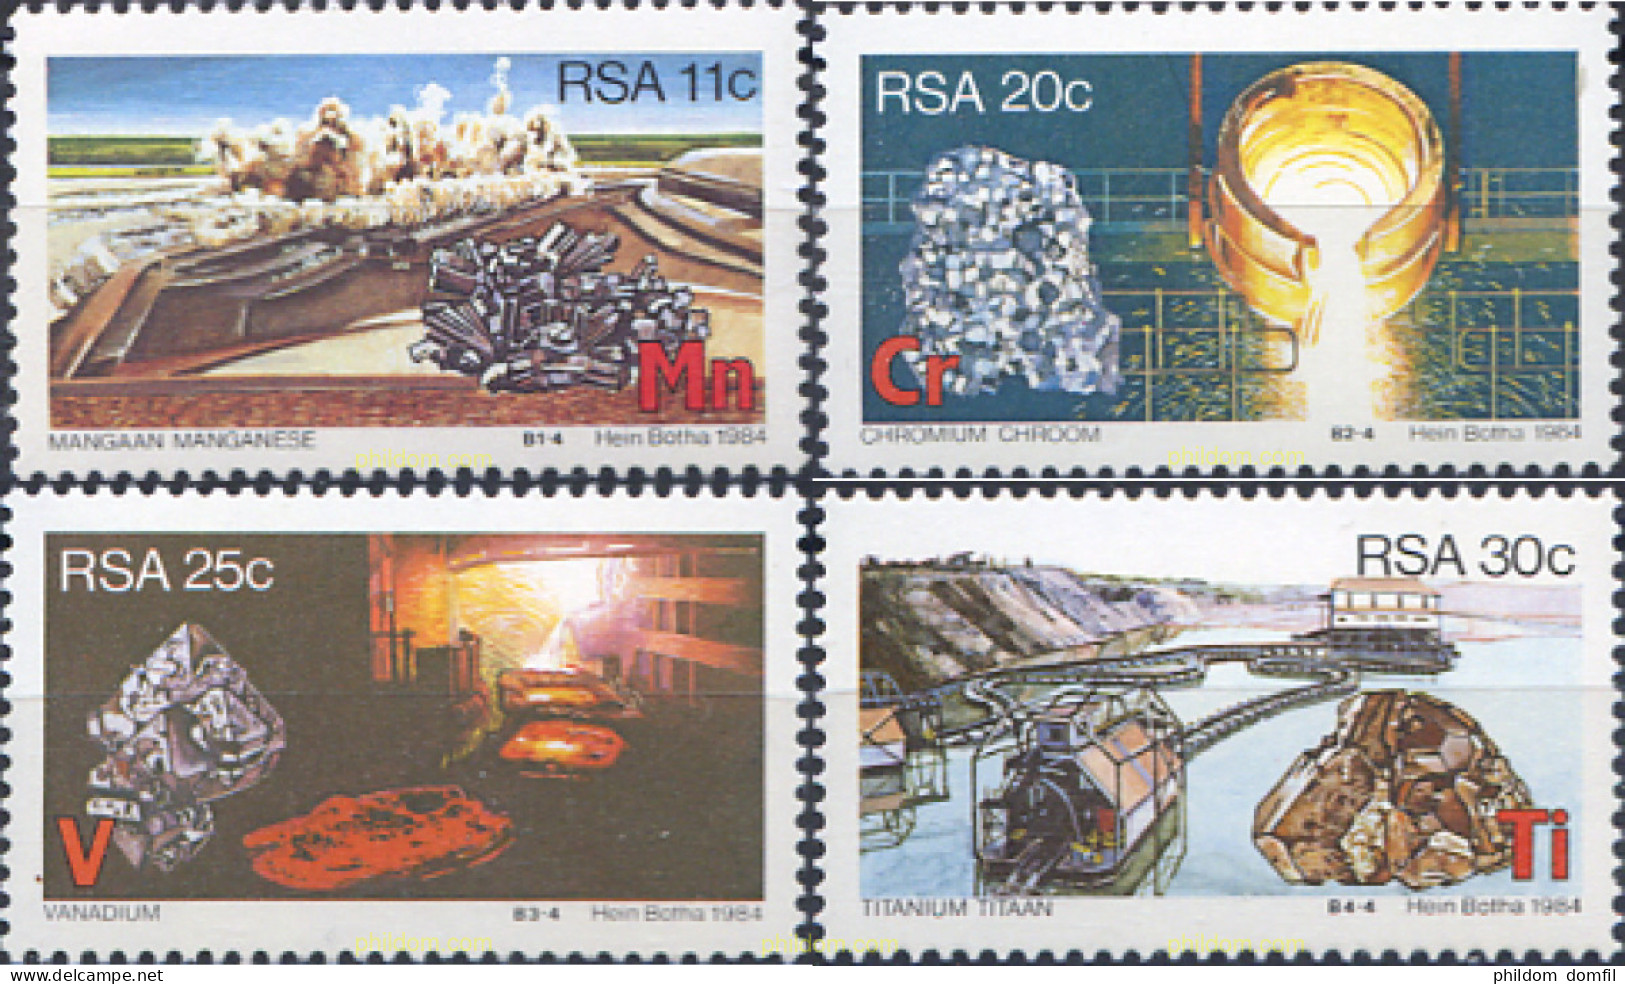 281595 MNH SUDAFRICA 1984 RECURSOS EN MINERALES - Unused Stamps